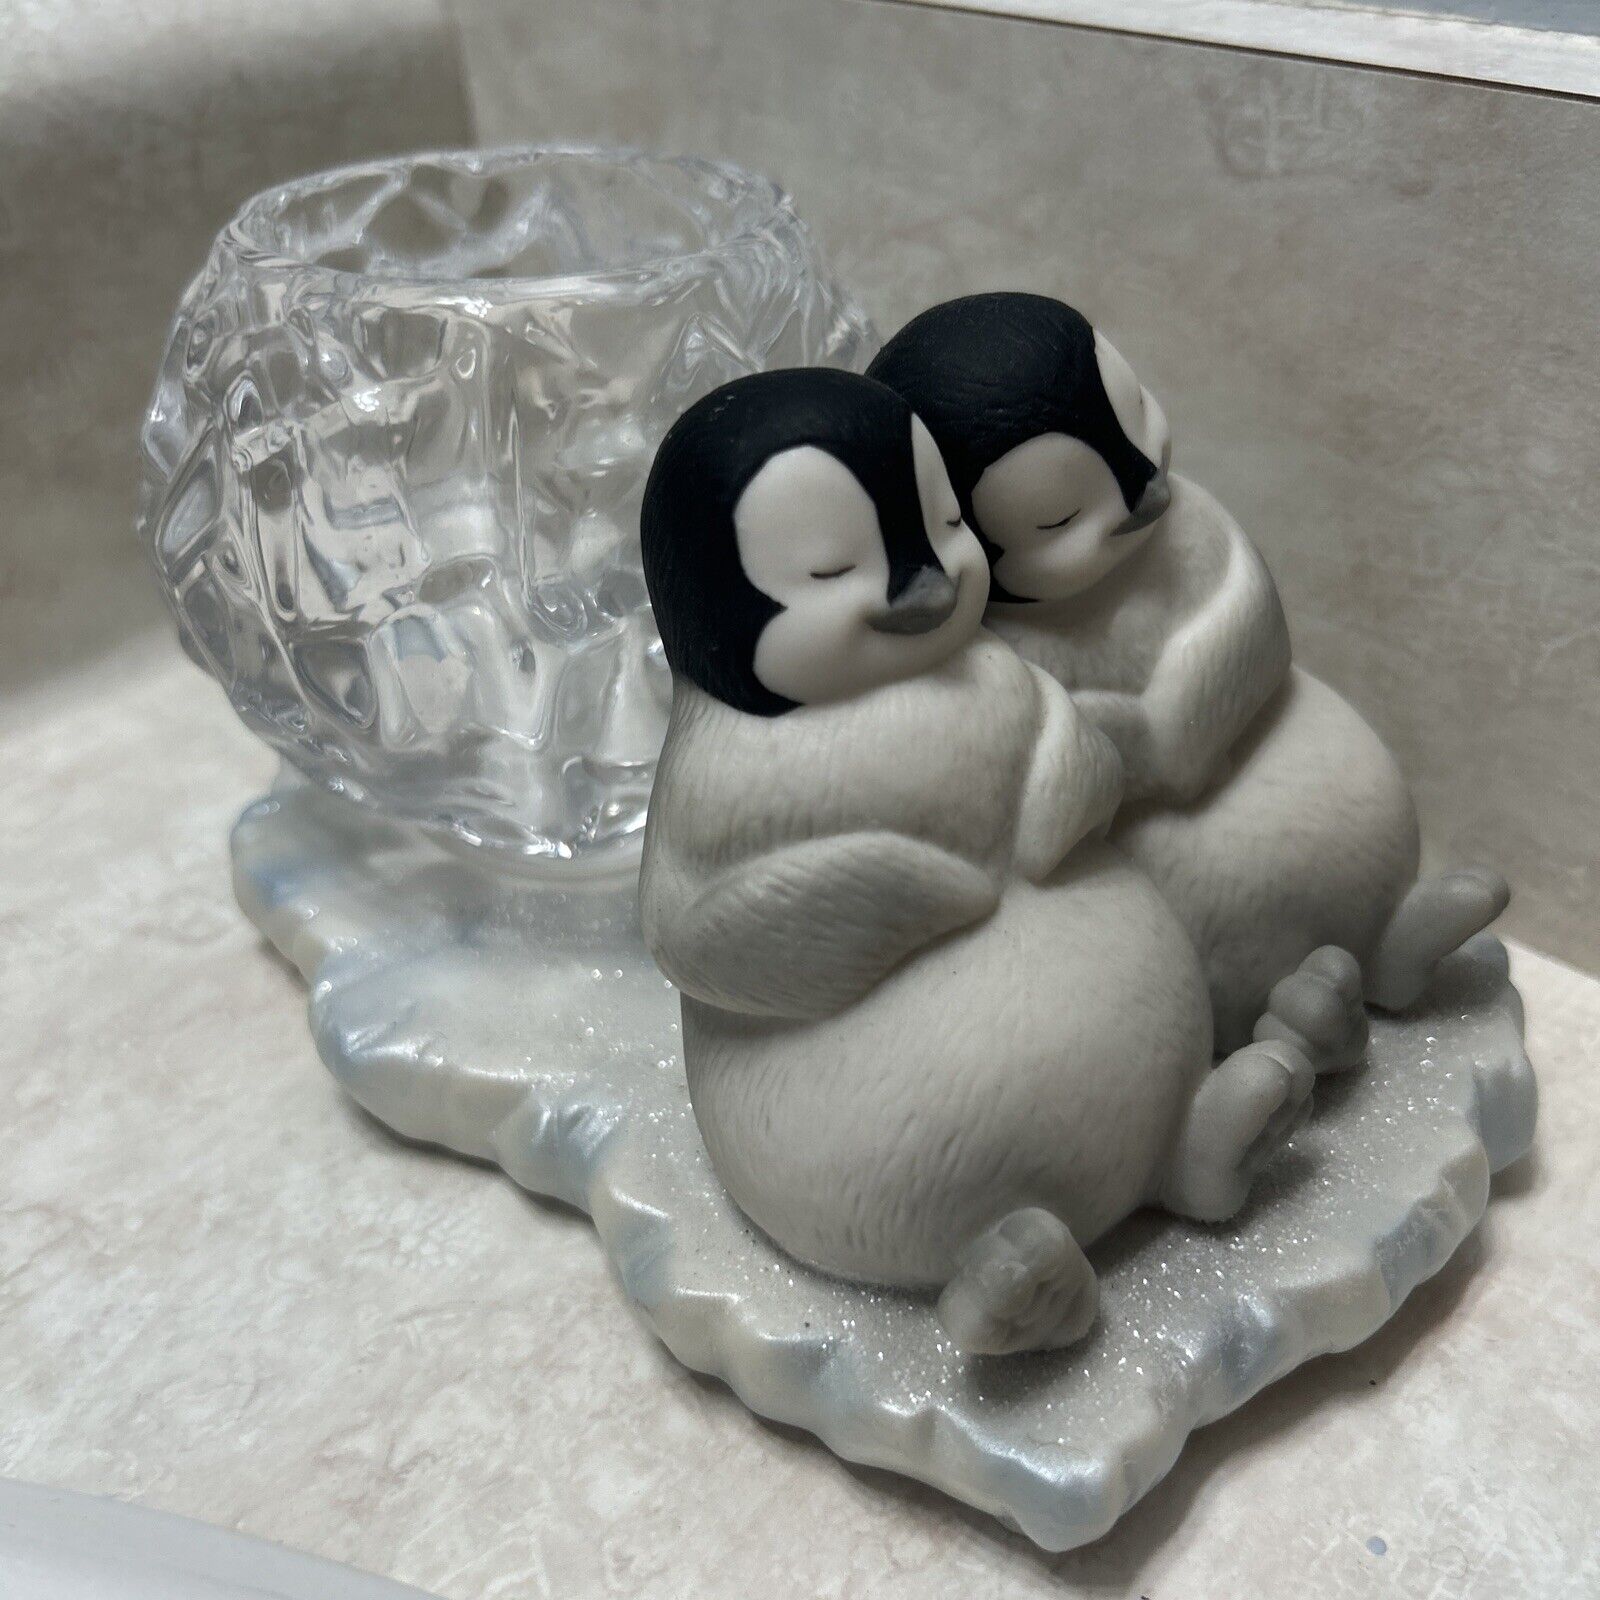 PartyLite Cuddling Penguin Polar Pals Ceramic Tea Light Candle Holder